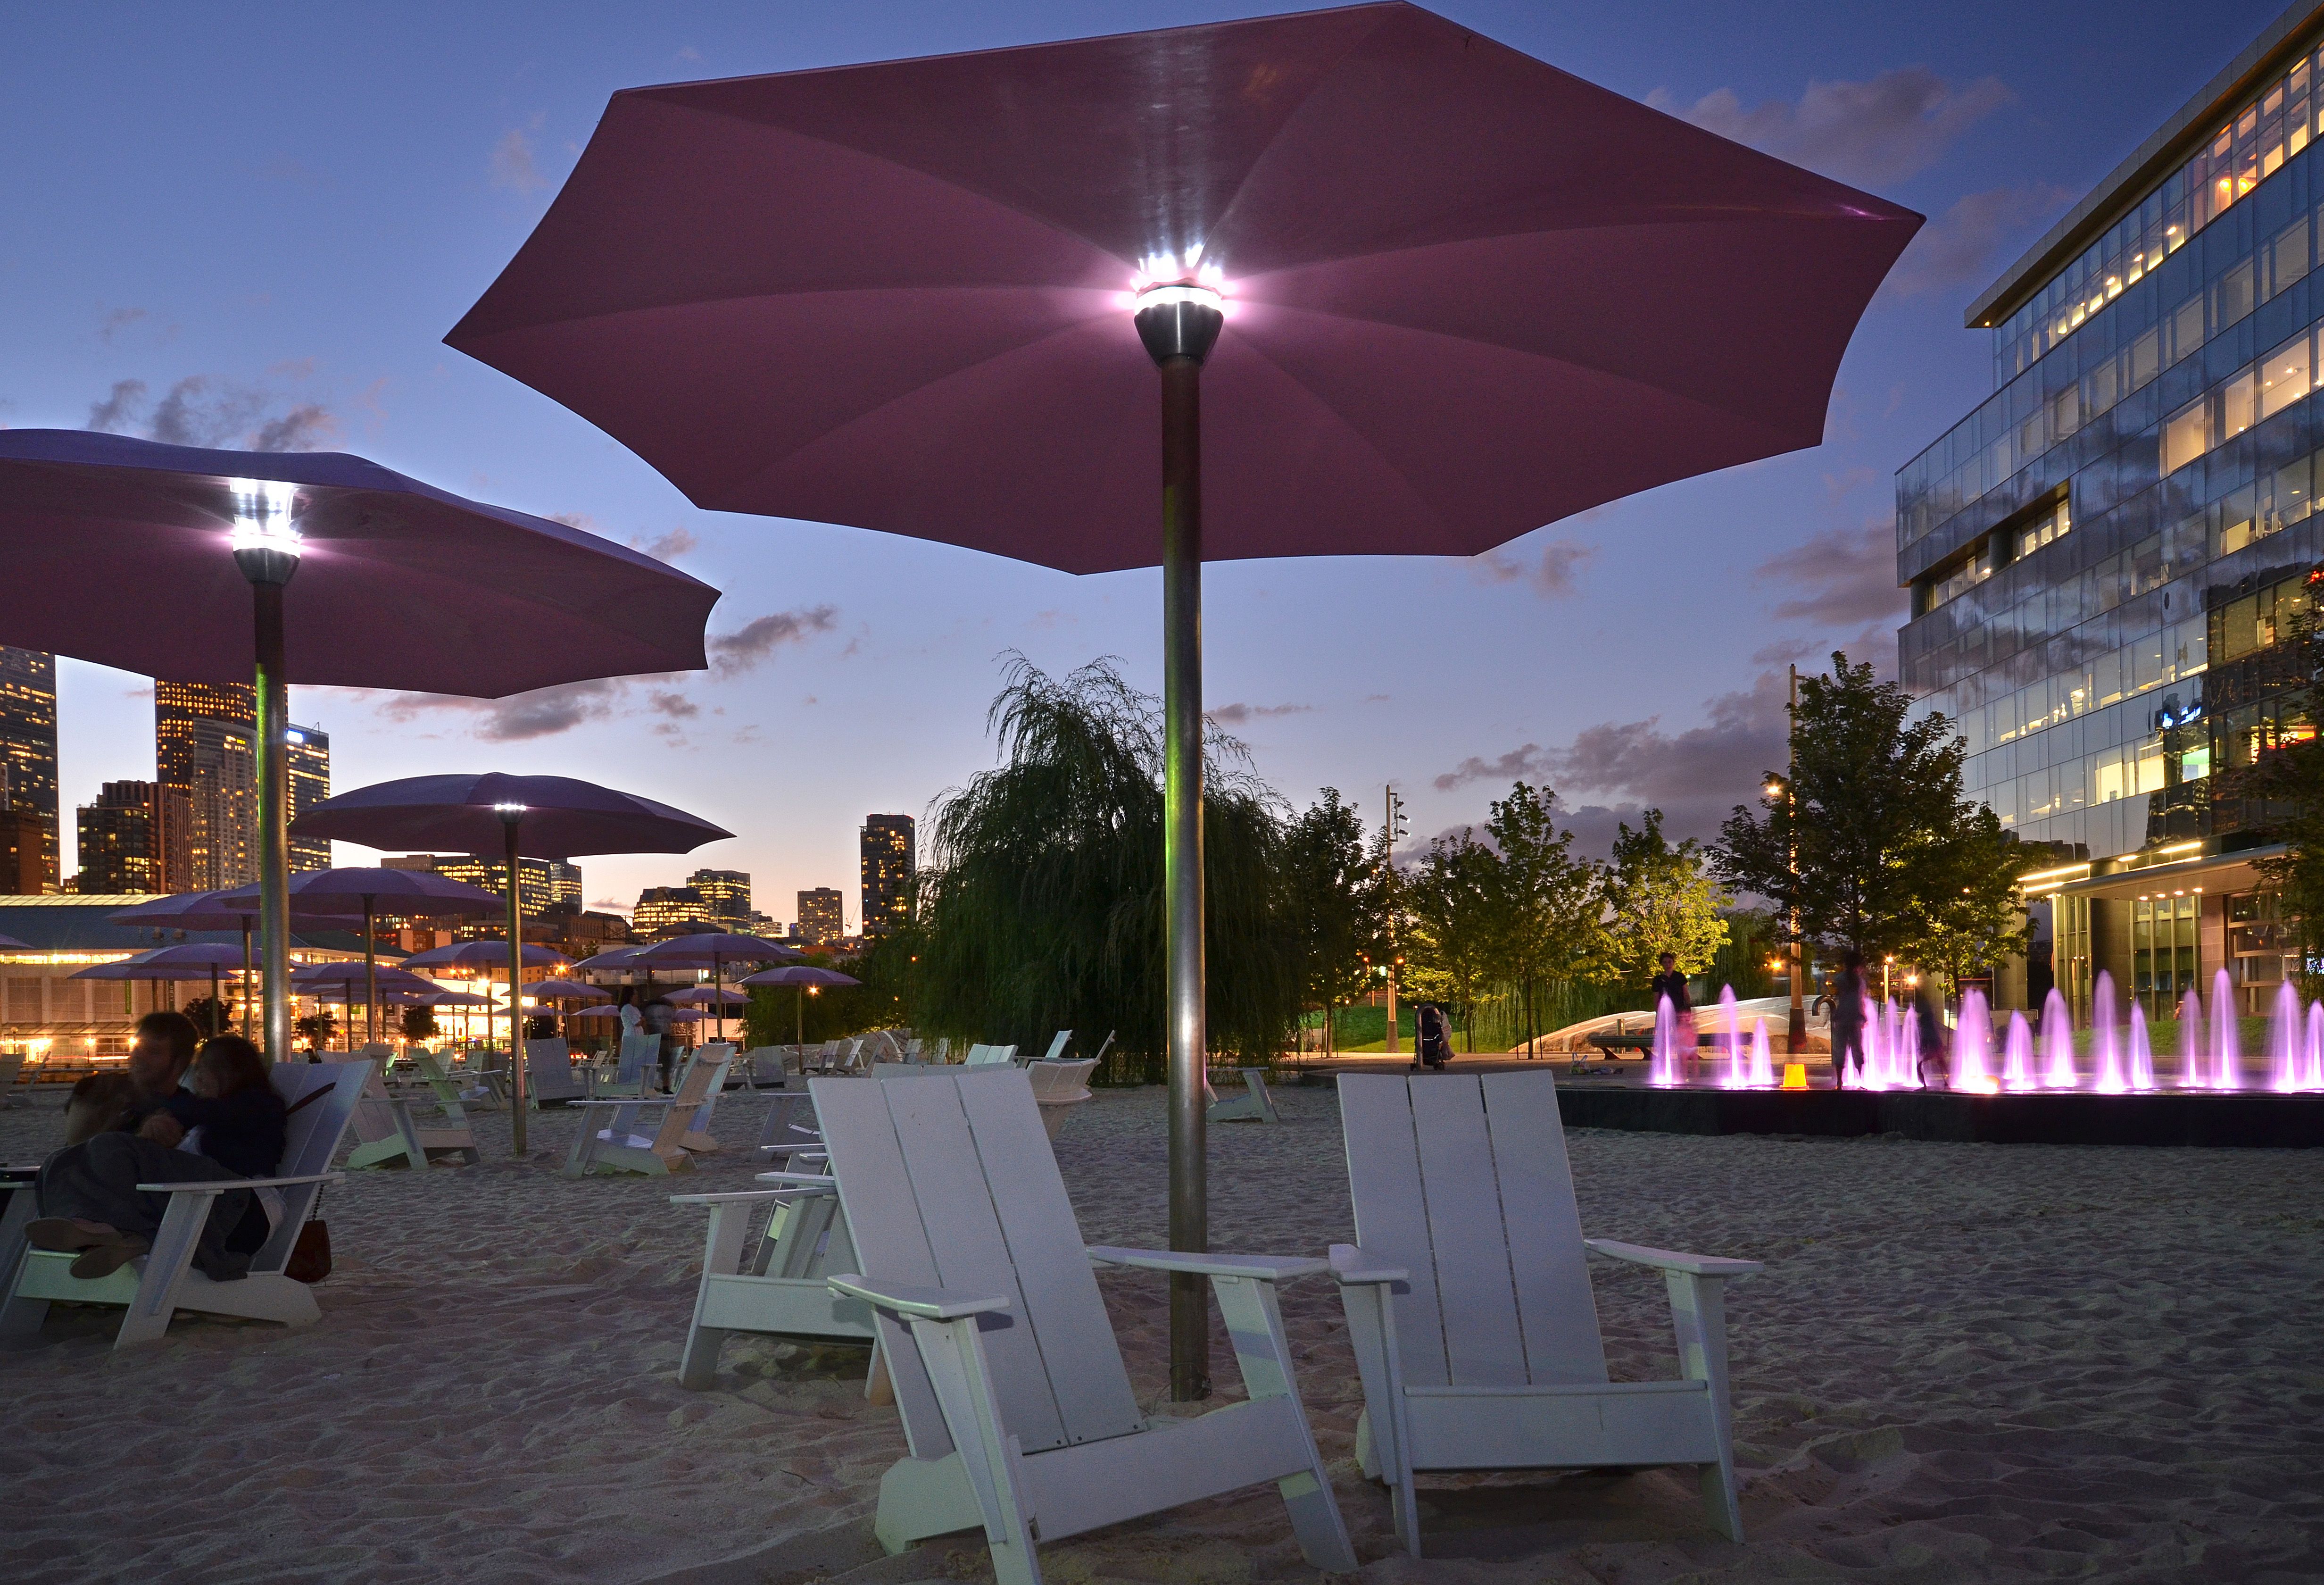 The pink umbrellas, white Muskoka chairs and sandy beach at Canada's Sugar Beach